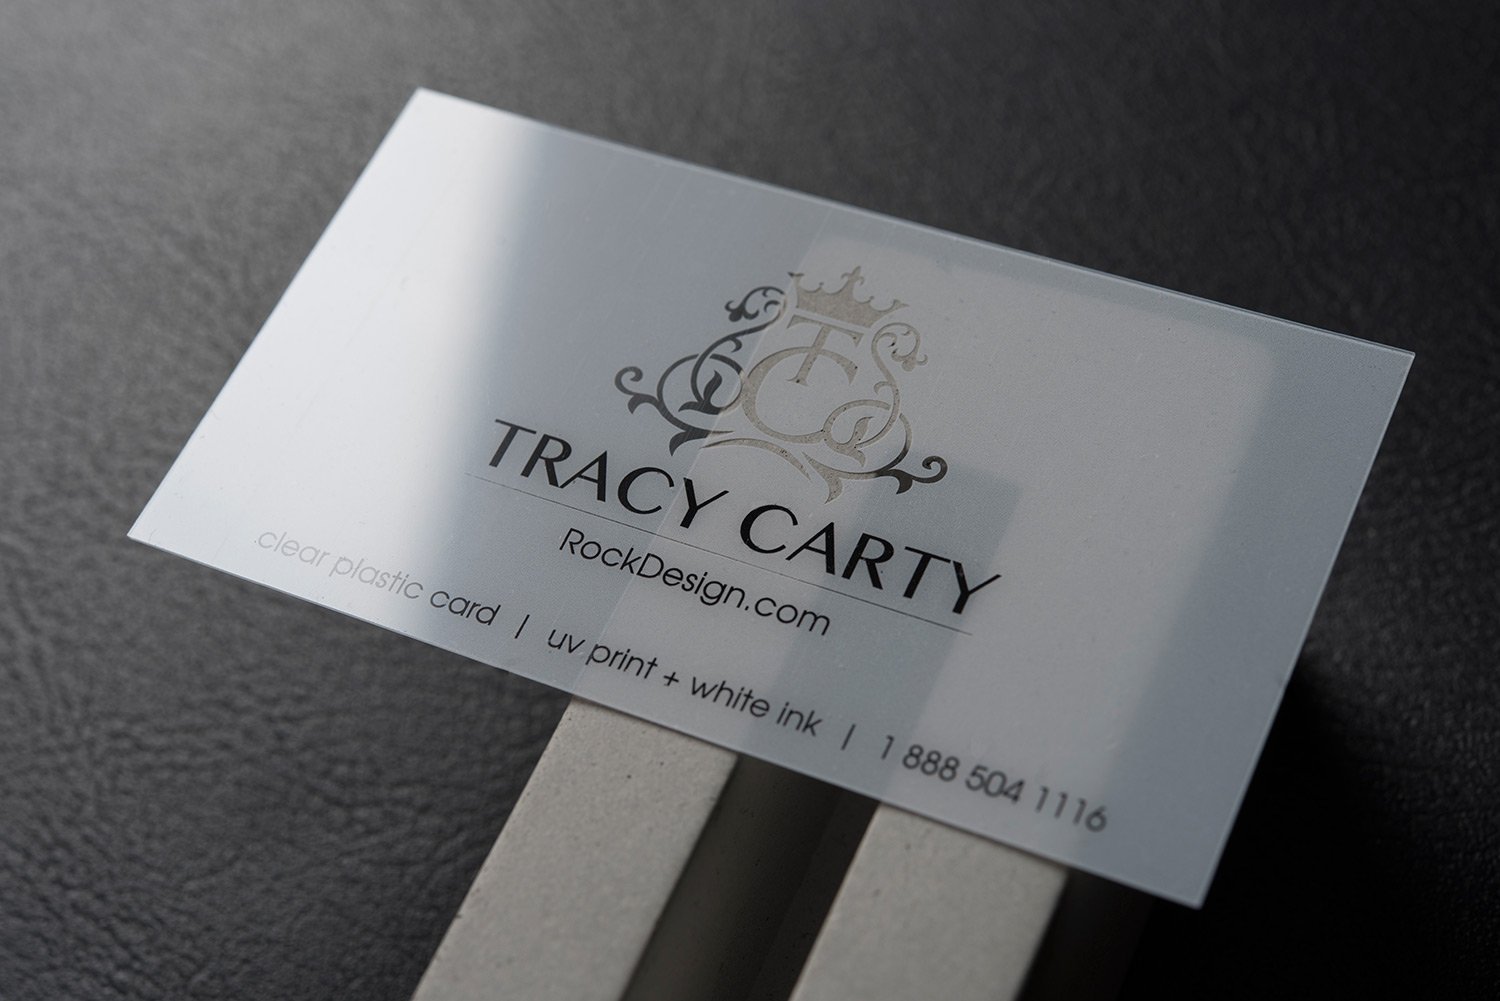 Elegant transparent plastic name card design – Tracy Carty Inside Transparent Business Cards Template